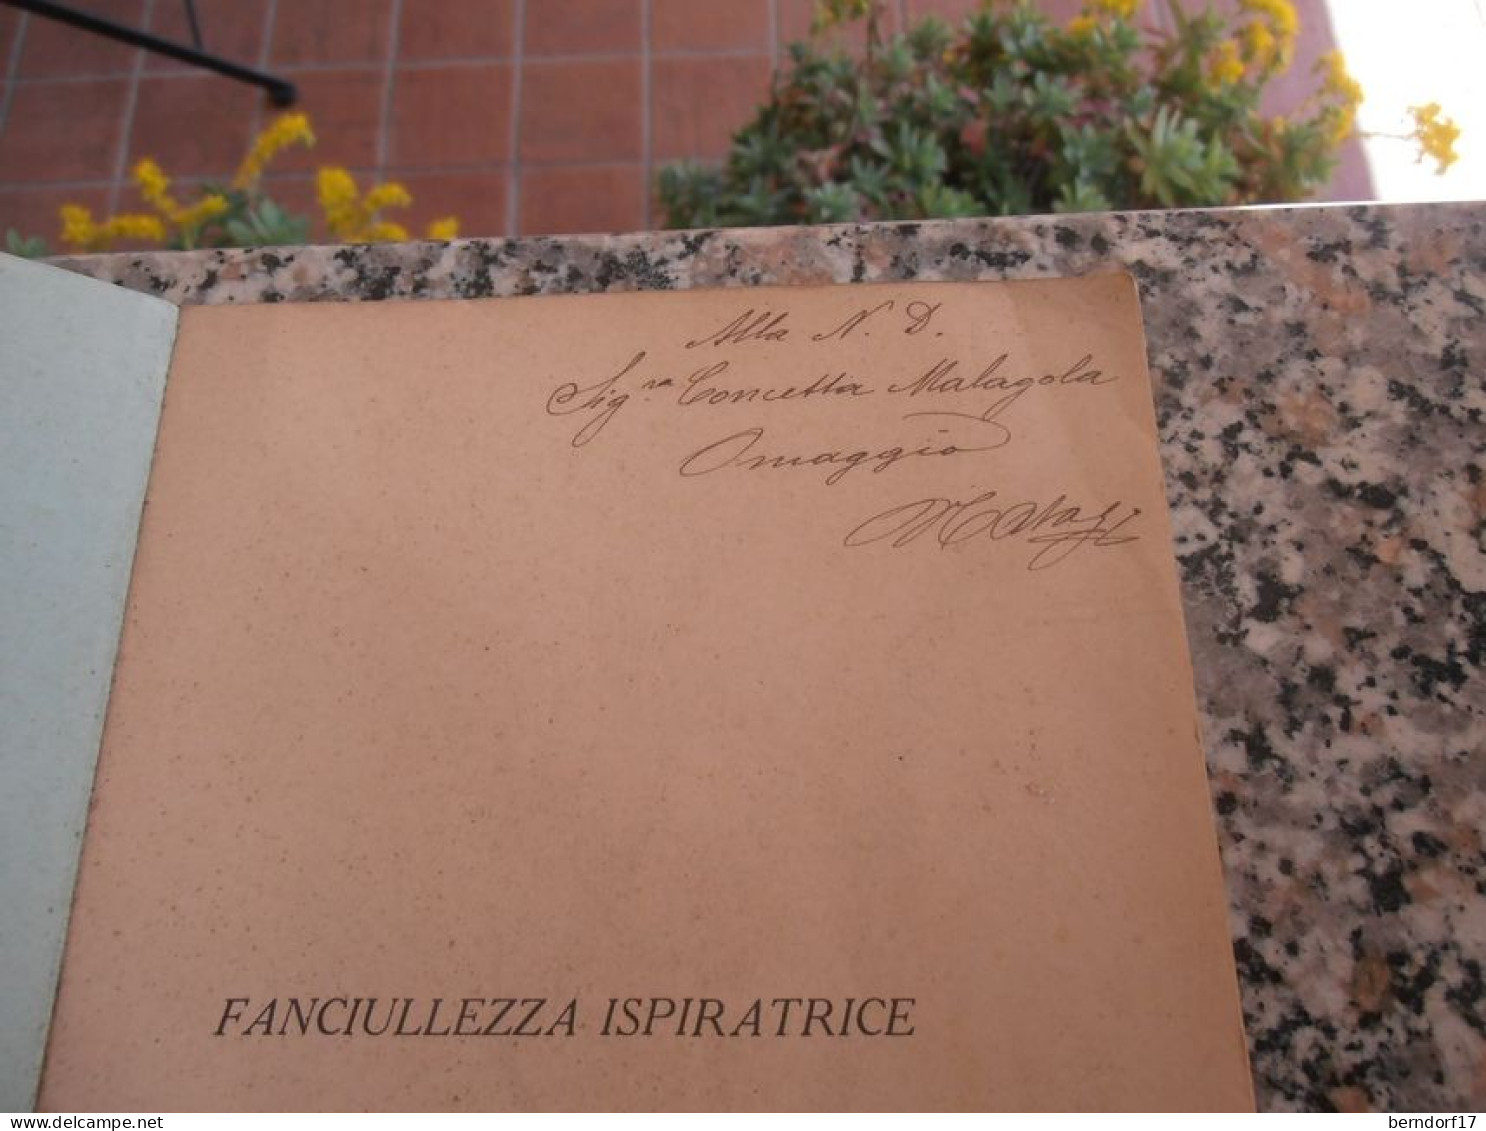 FANCIULLEZZA ISPIRATRICE - VINCENZO NATALI - Poetry